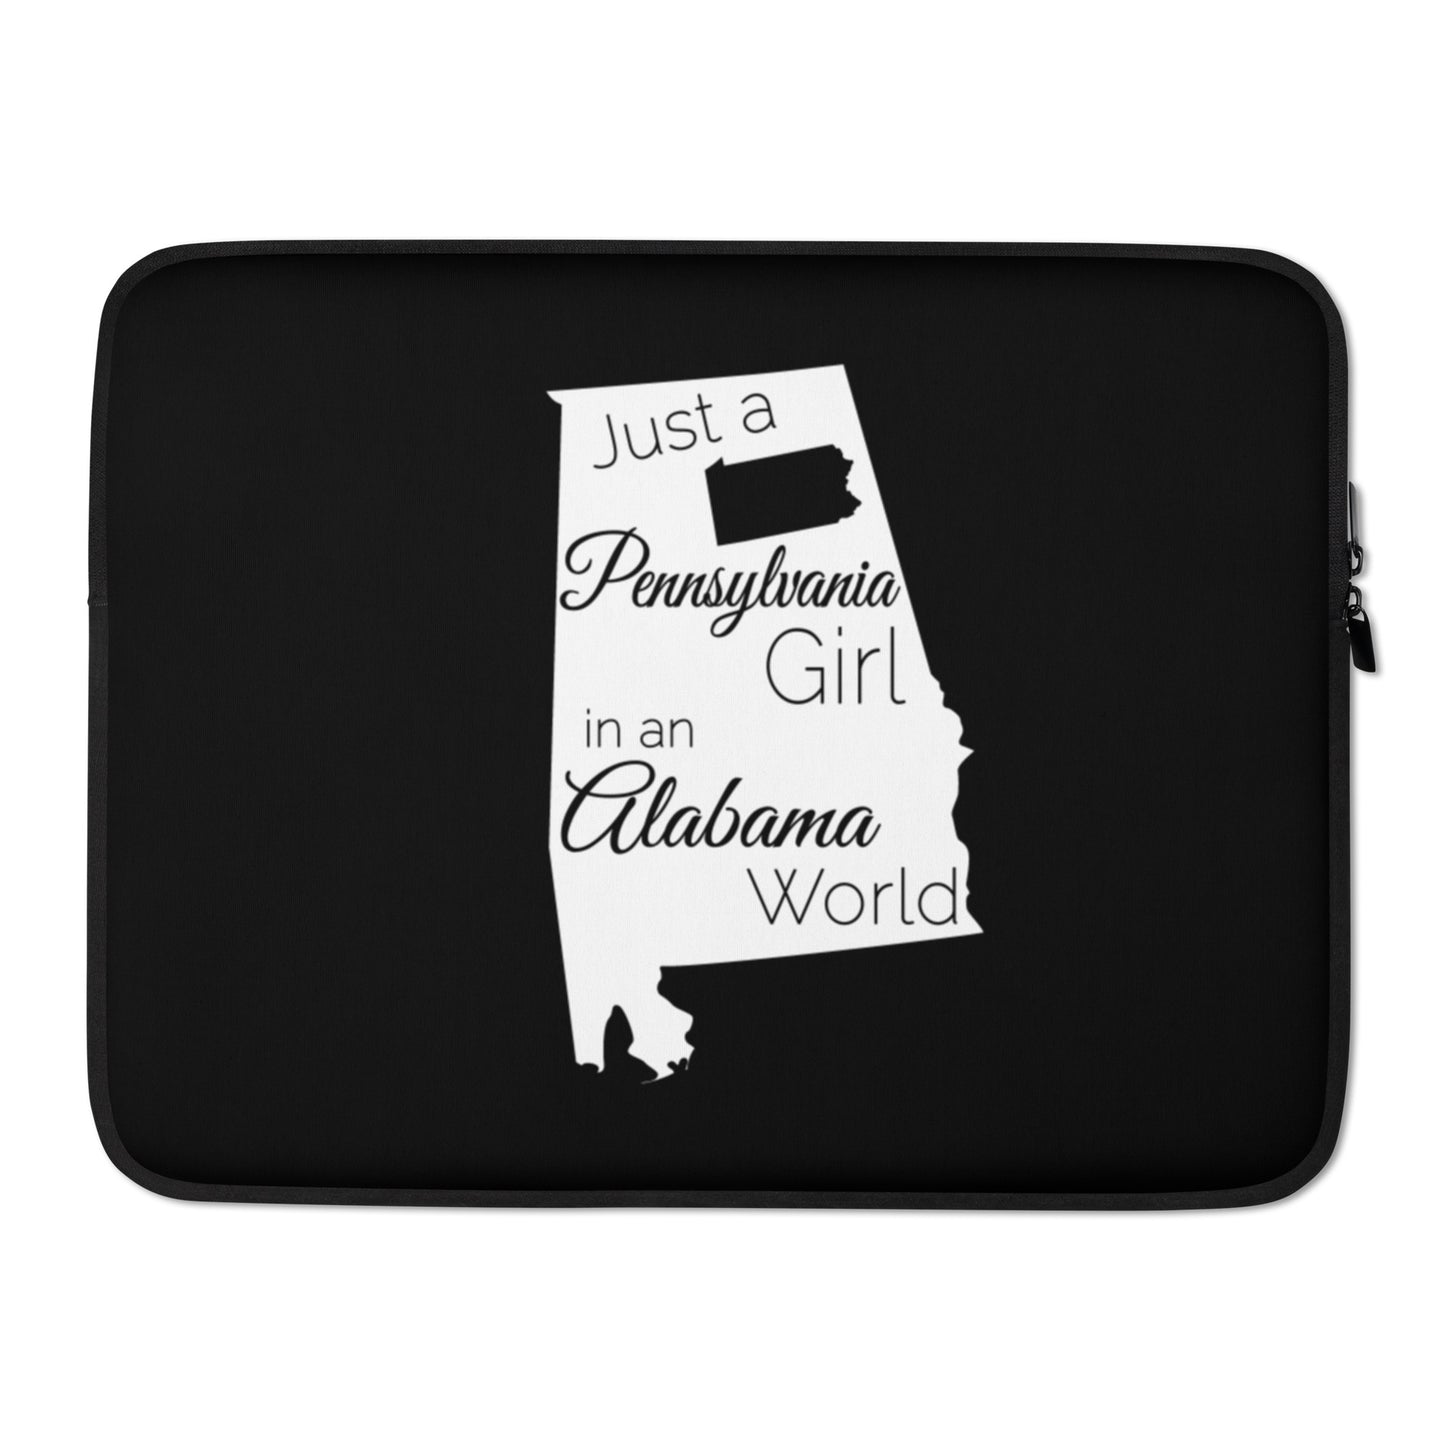 Just a Pennsylvania Girl in an Alabama World Laptop Sleeve